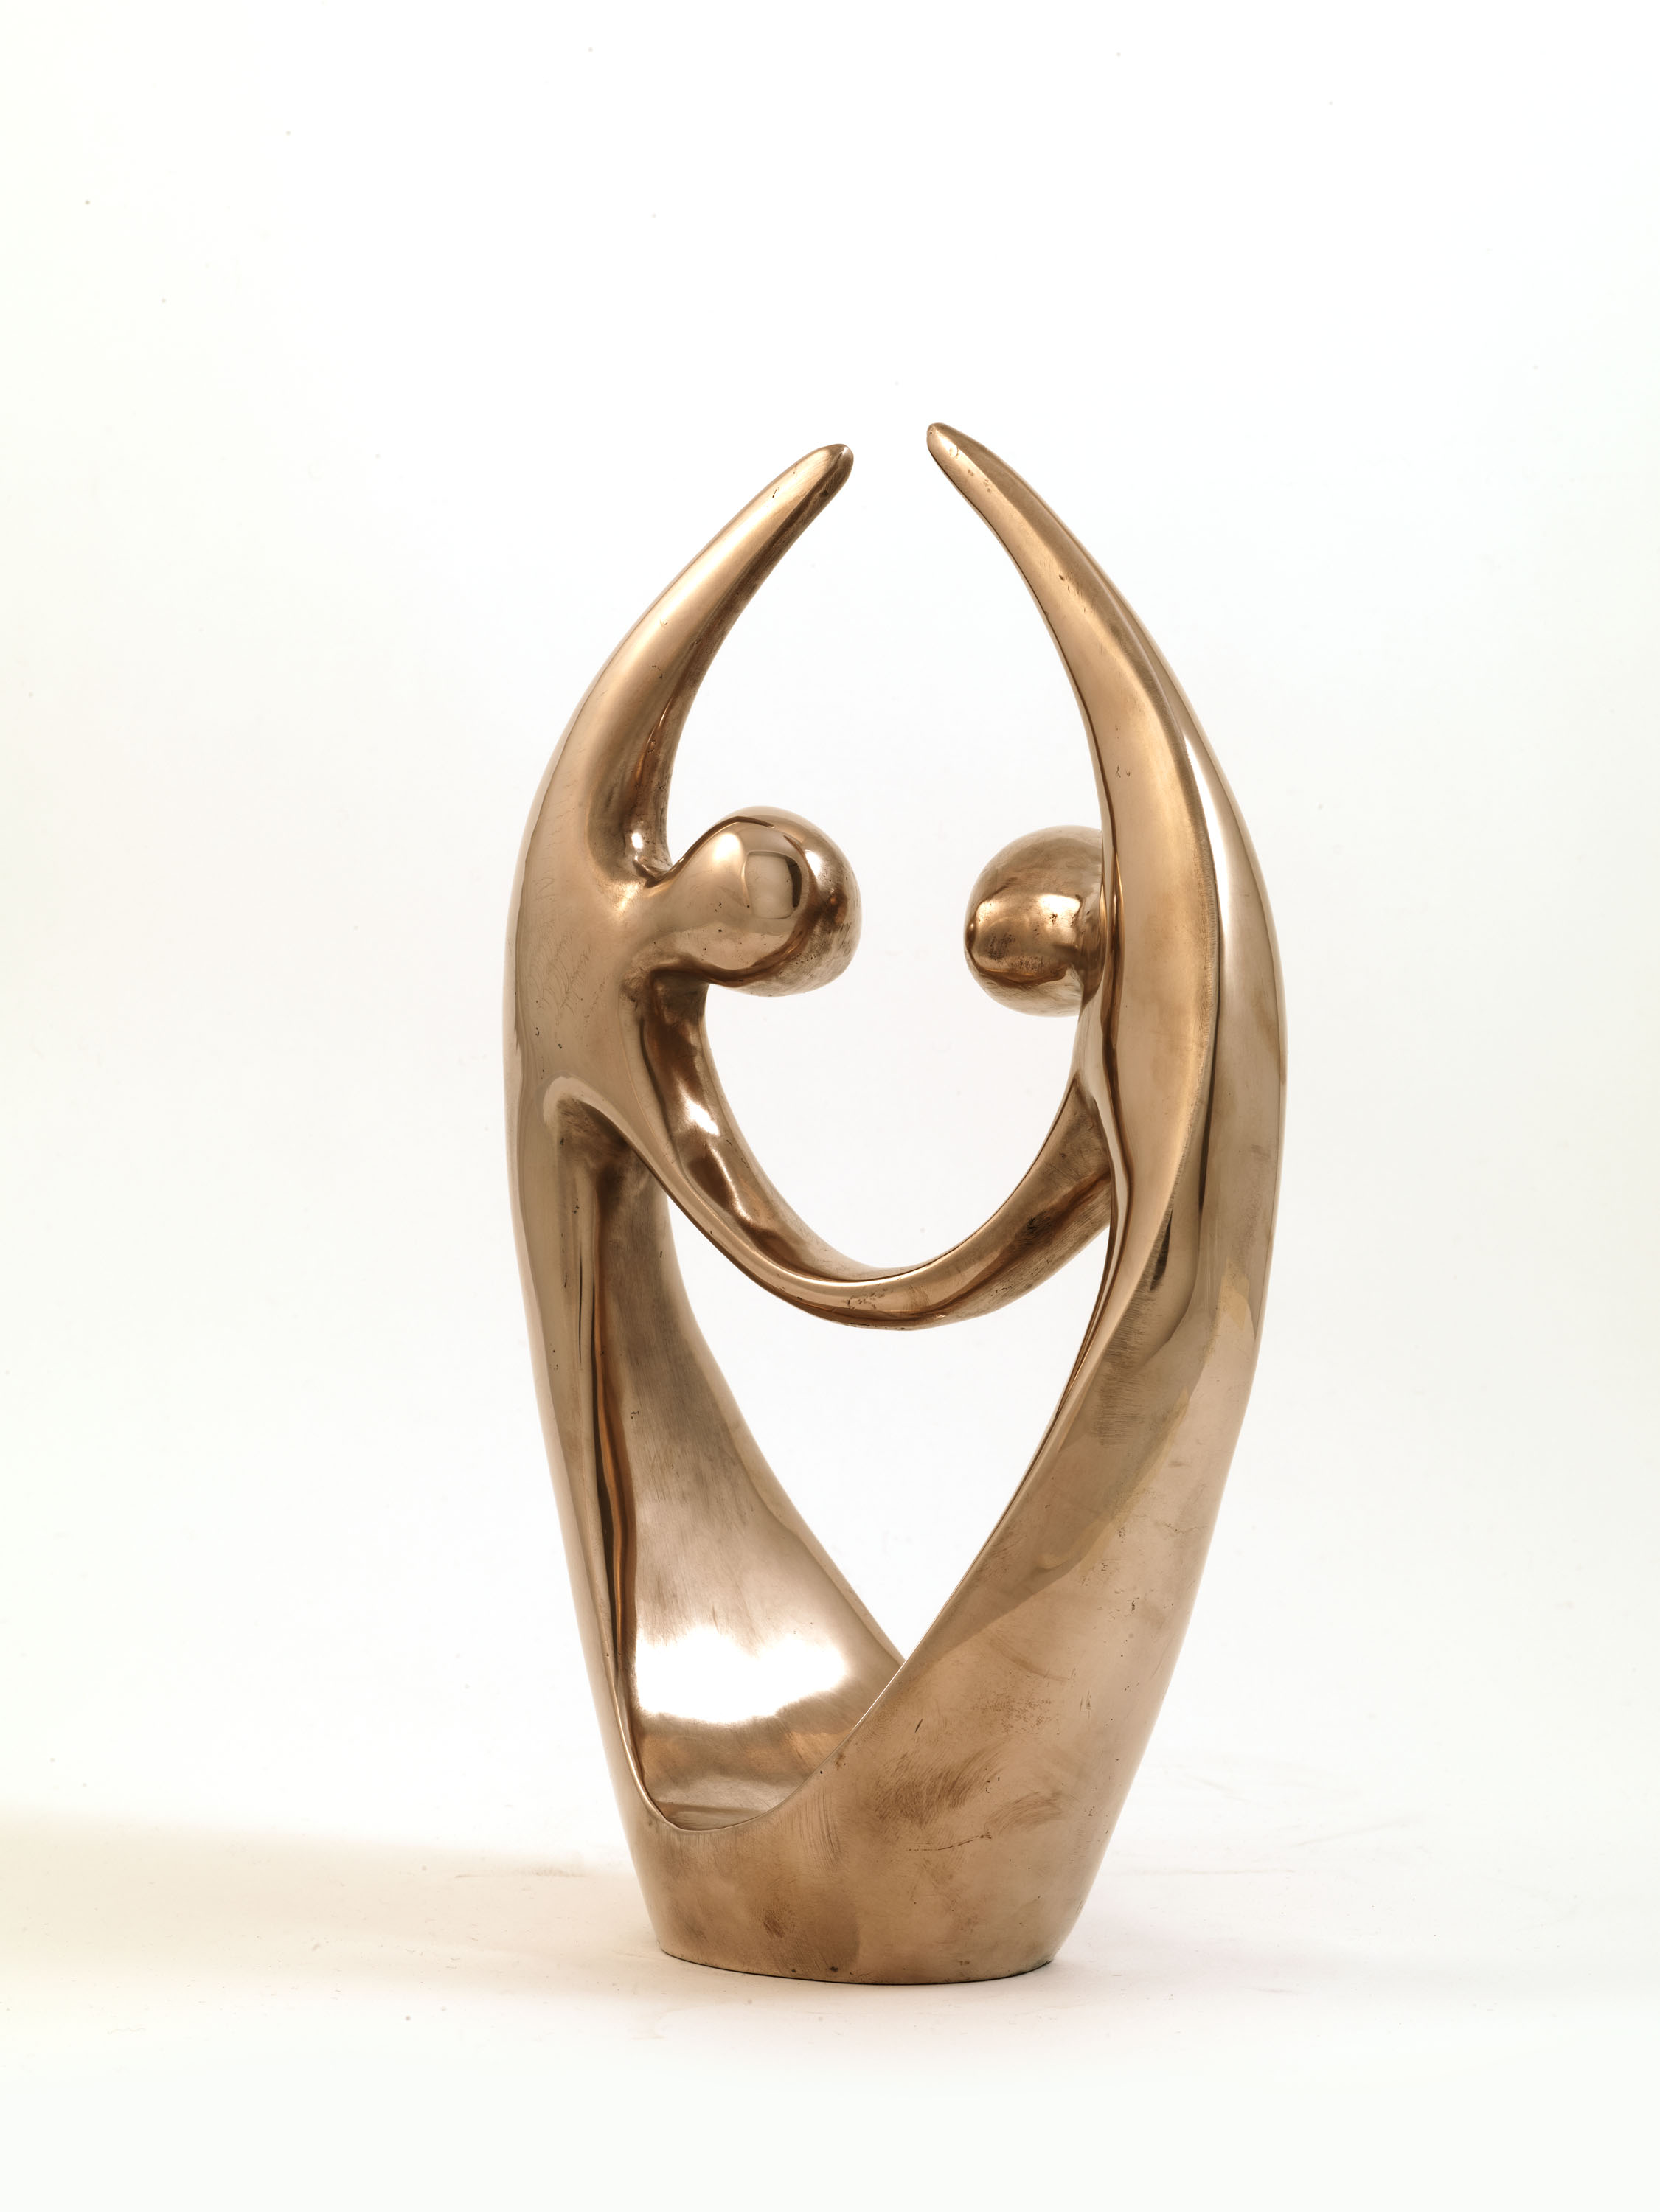 The Dancers (Bronze) by Julia Godsiff